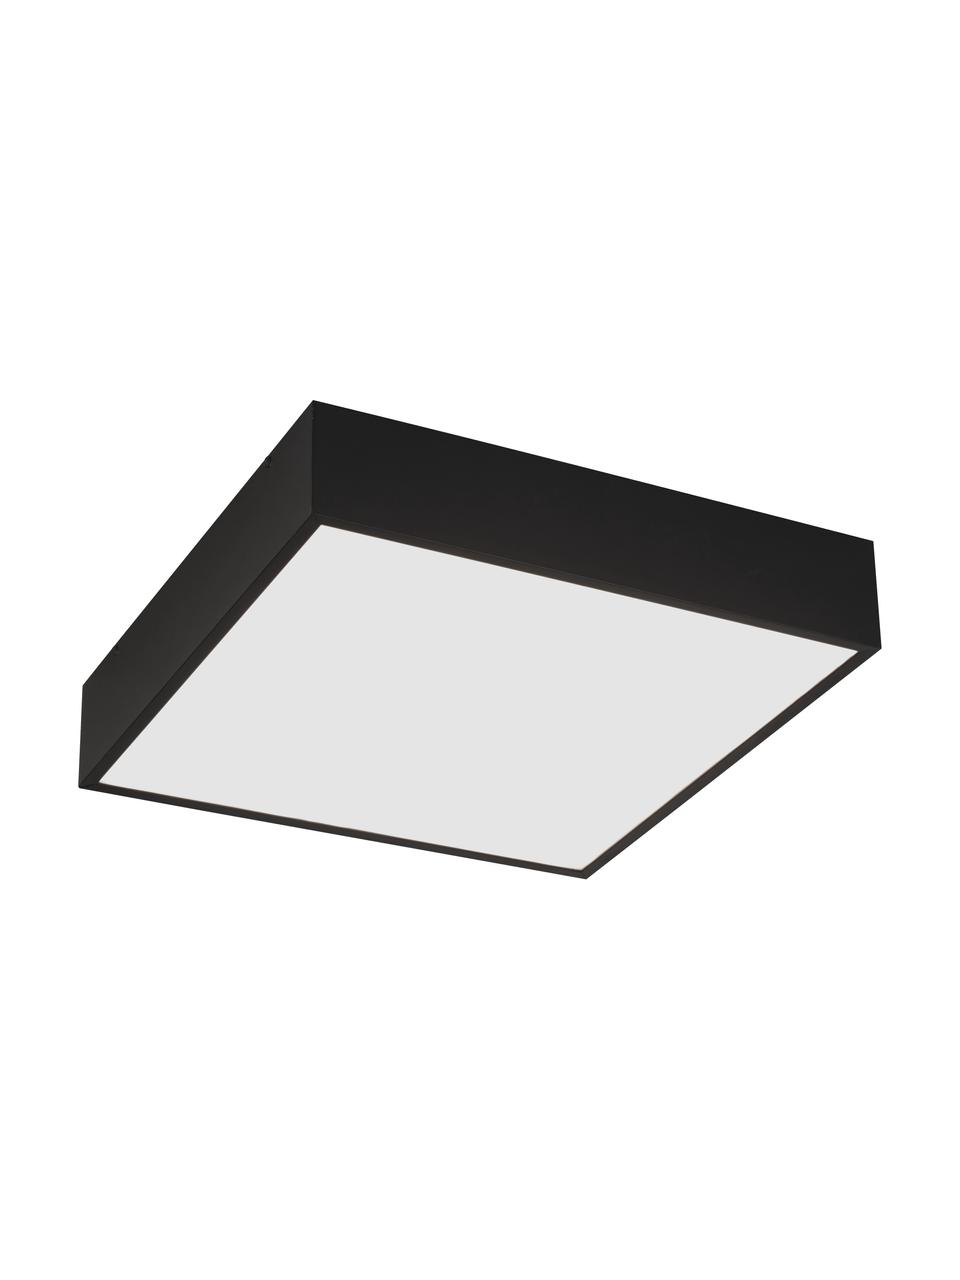 Kleine LED plafondlamp Zeus in zwart, Diffuser: kunststof, Zwart, B 30 x H 6 cm